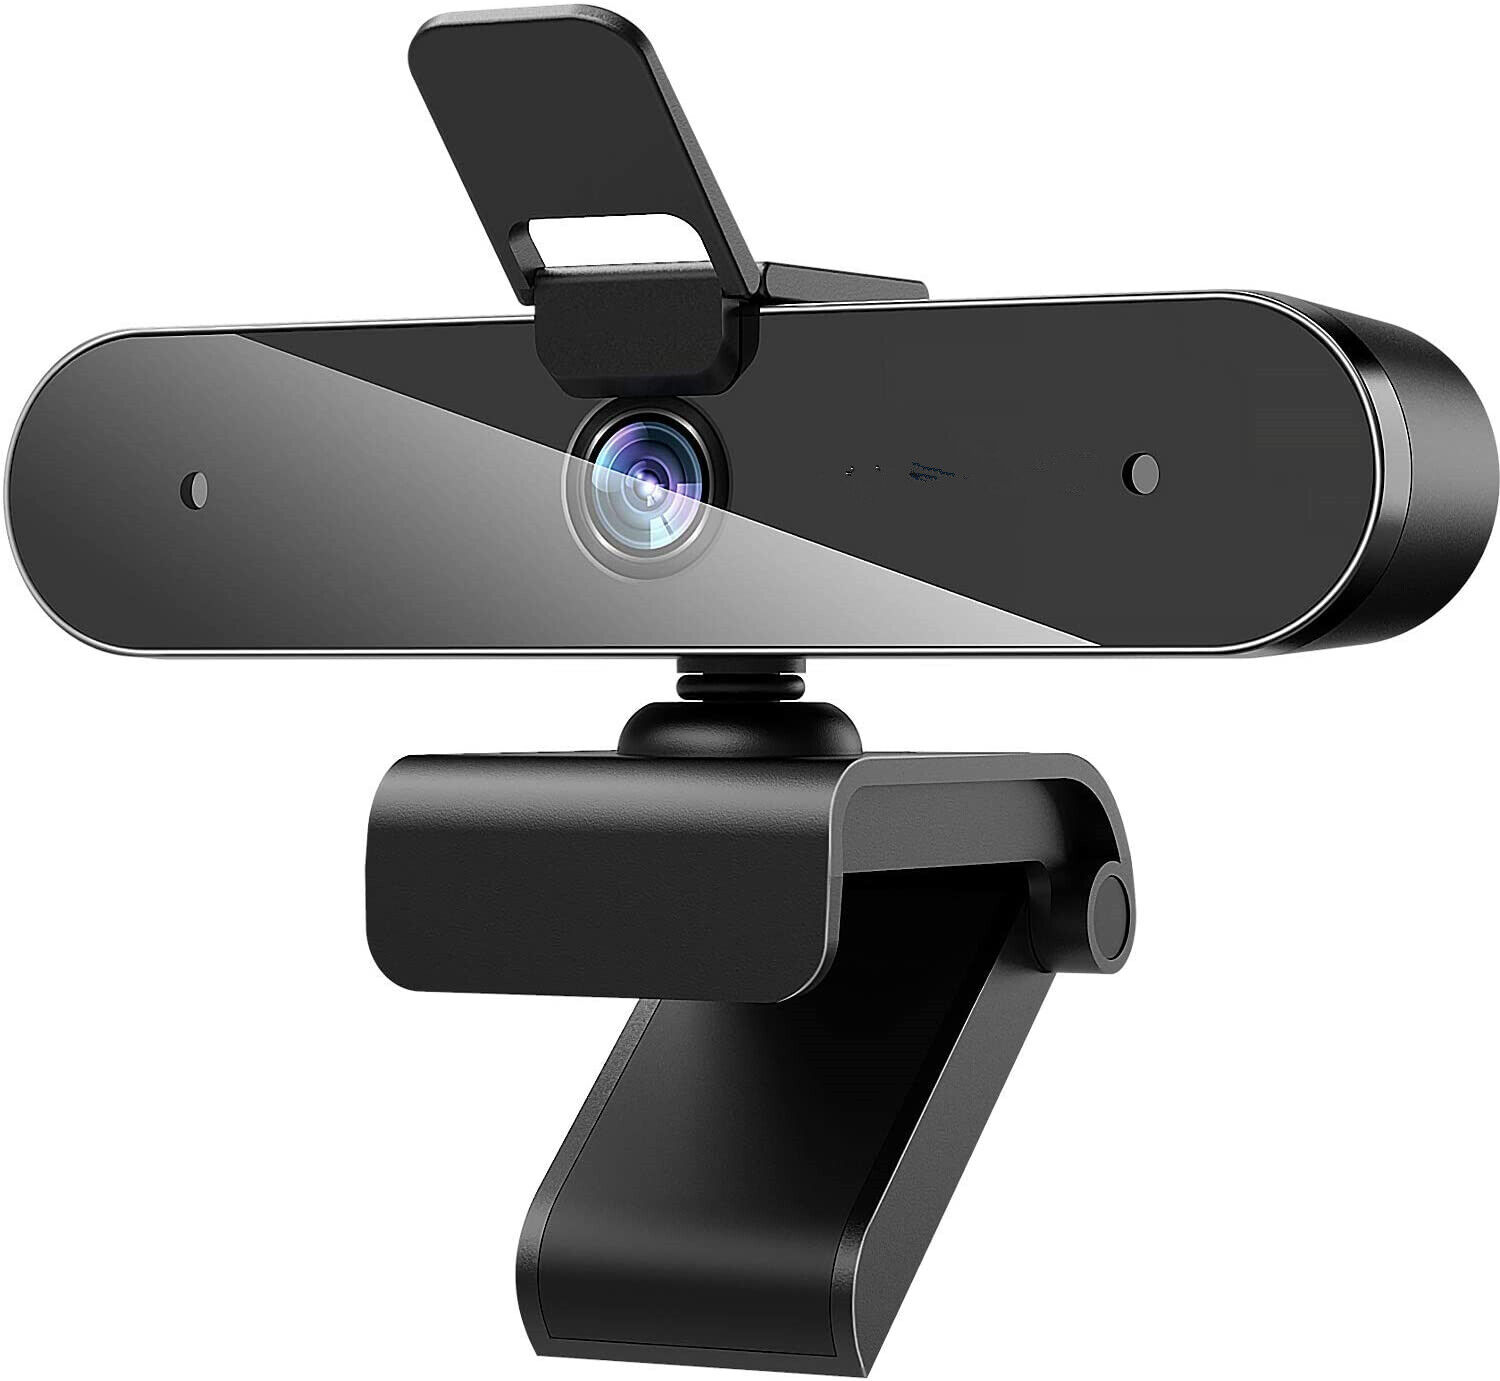 1080P Webcam for PC Laptop Desktop, 360-Degree Rotation Streaming Webcam